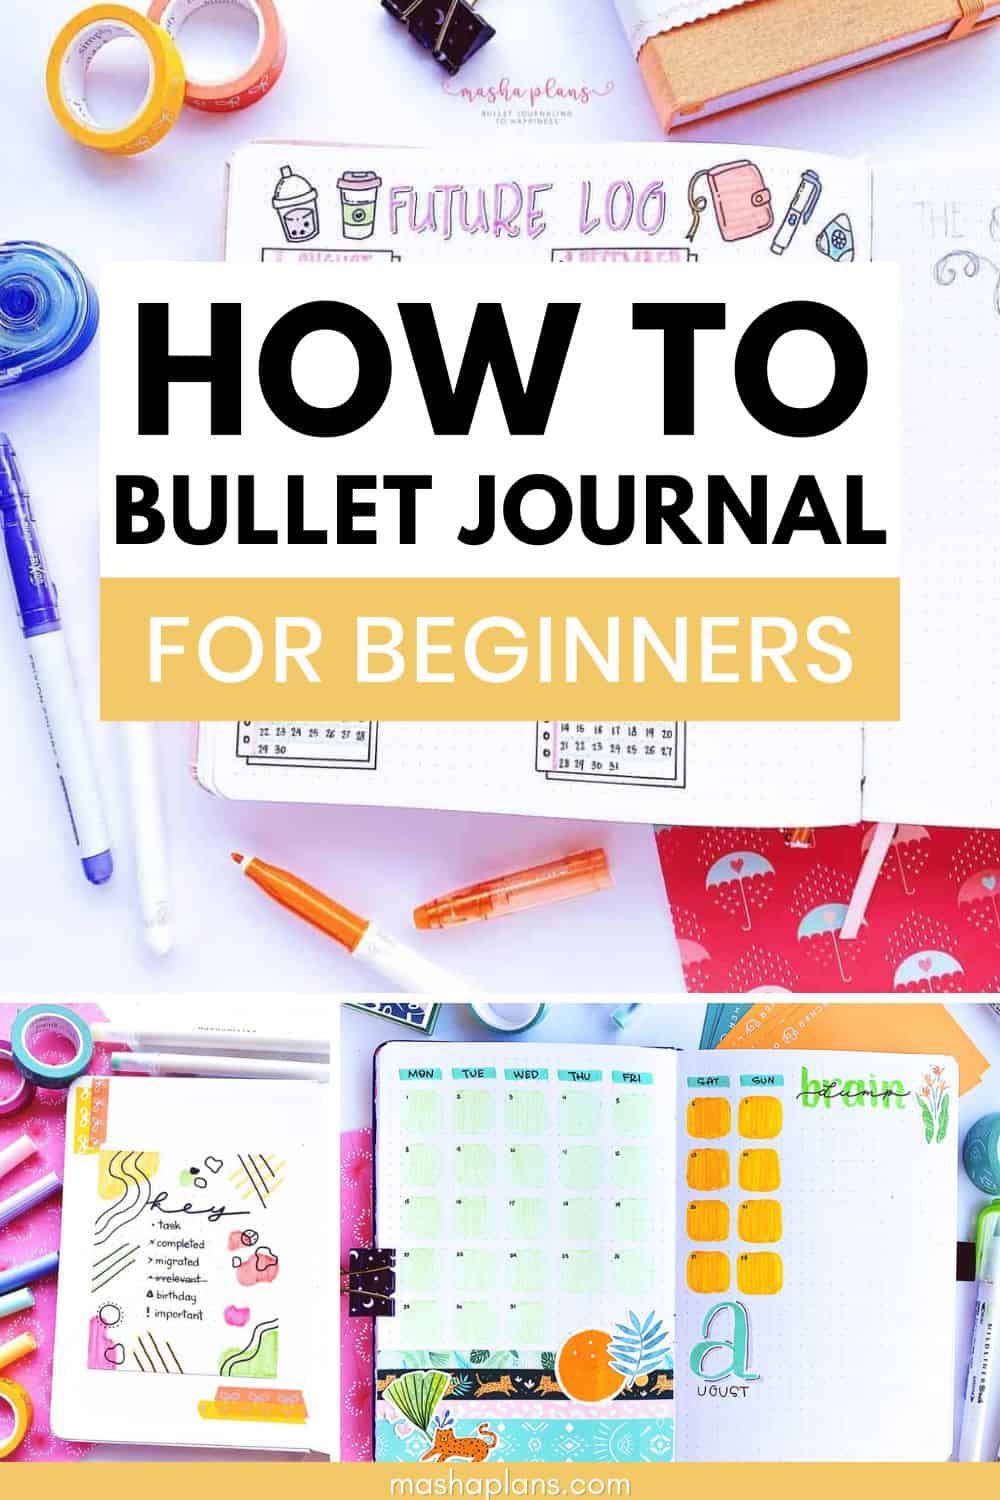 How To Bullet Journal For Beginners | Masha Plans